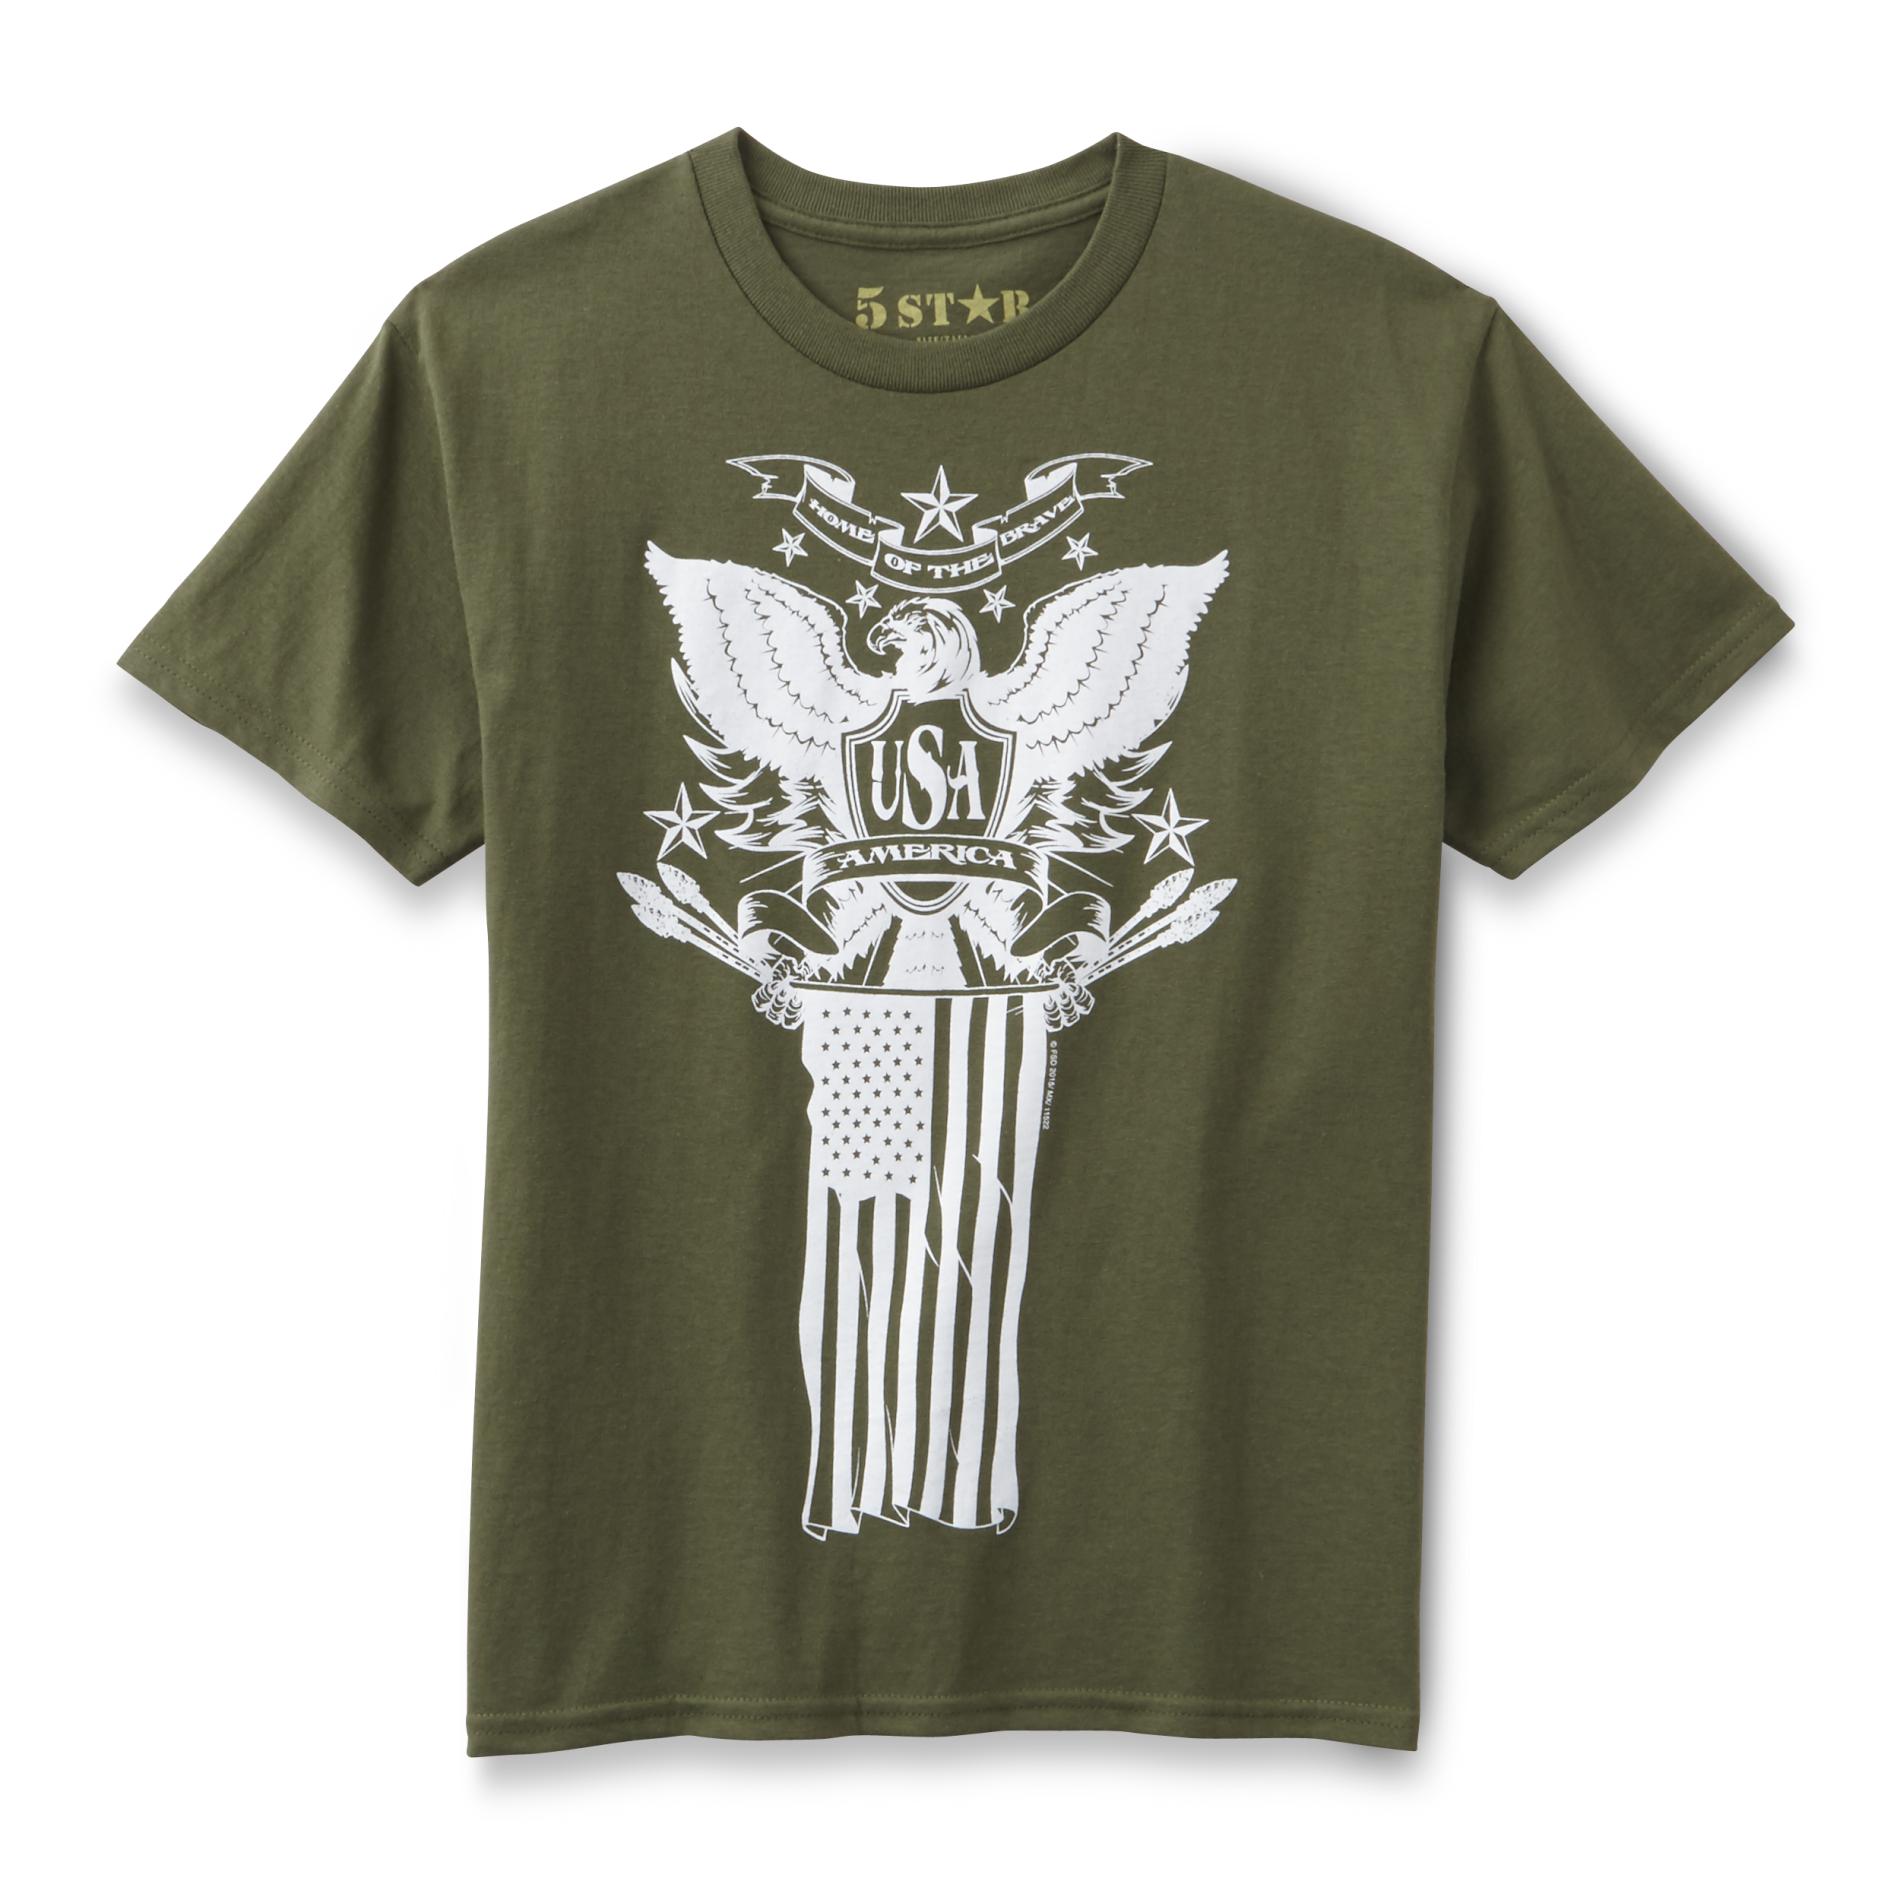 5Star Boy's Graphic T-Shirt - Eagle & Flag